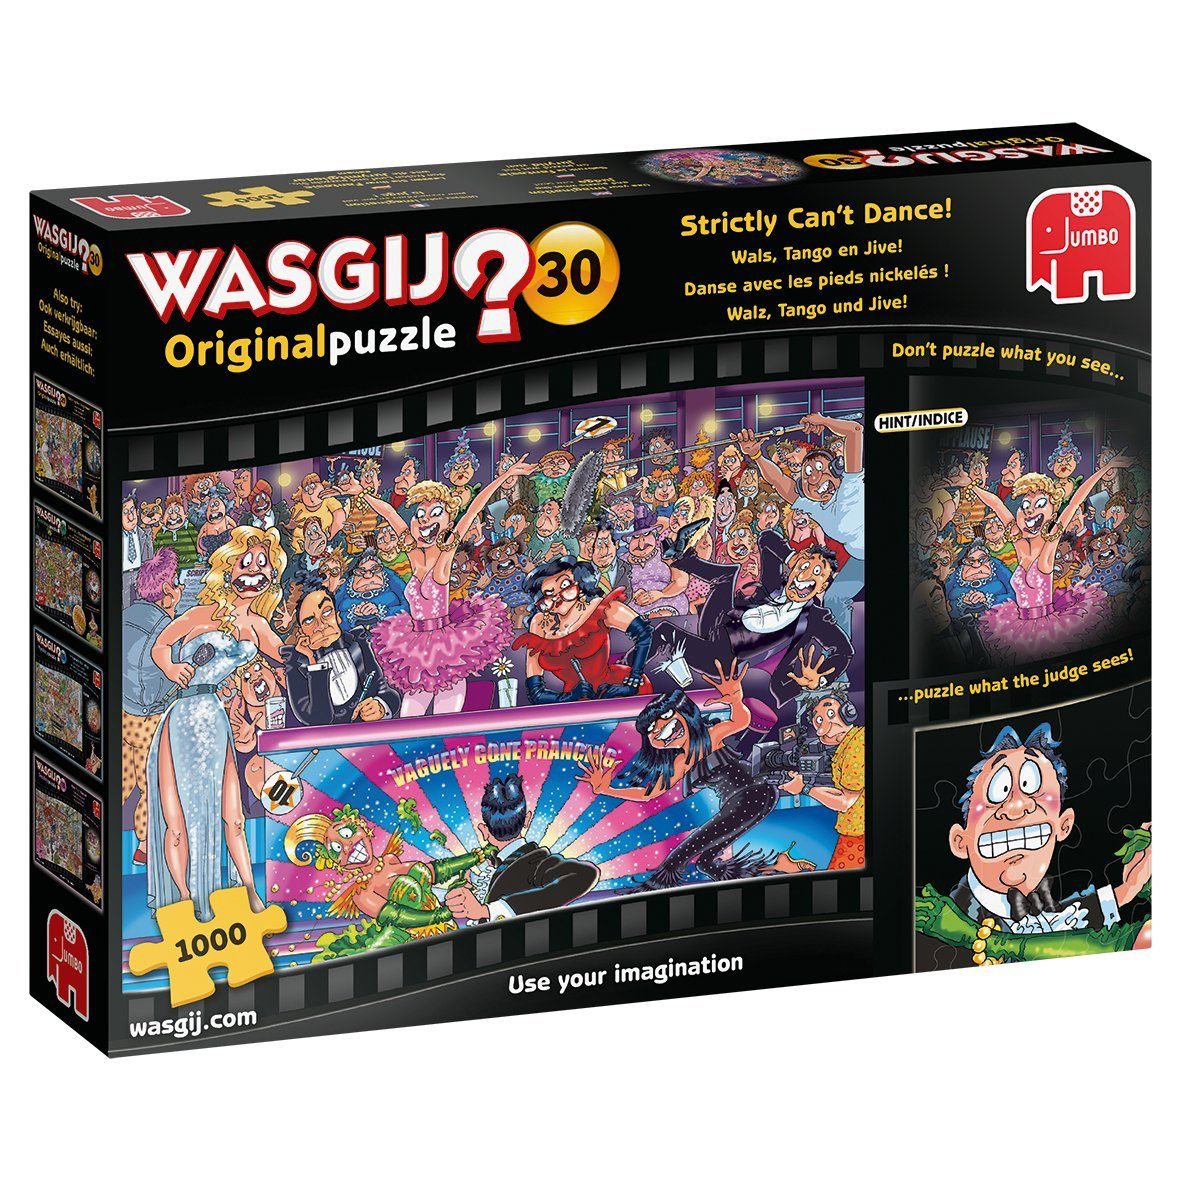 Jumbo Spiele Puzzle 19160 30 Walz,Tango Jive, und Original Wasgij 1000 Puzzleteile